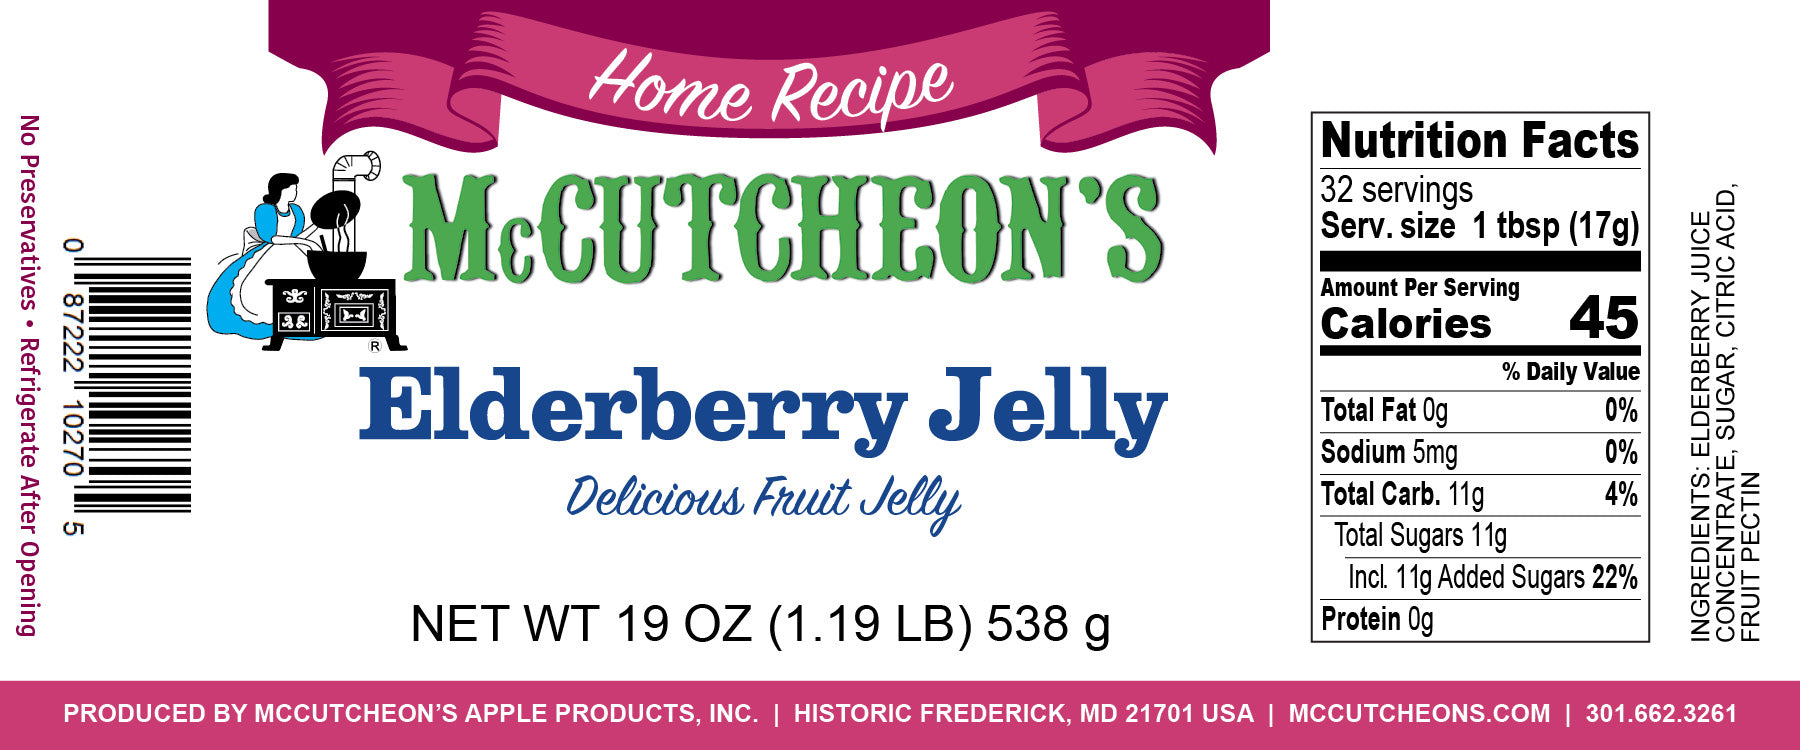 nutrition label for McCutcheon's elderberry jelly